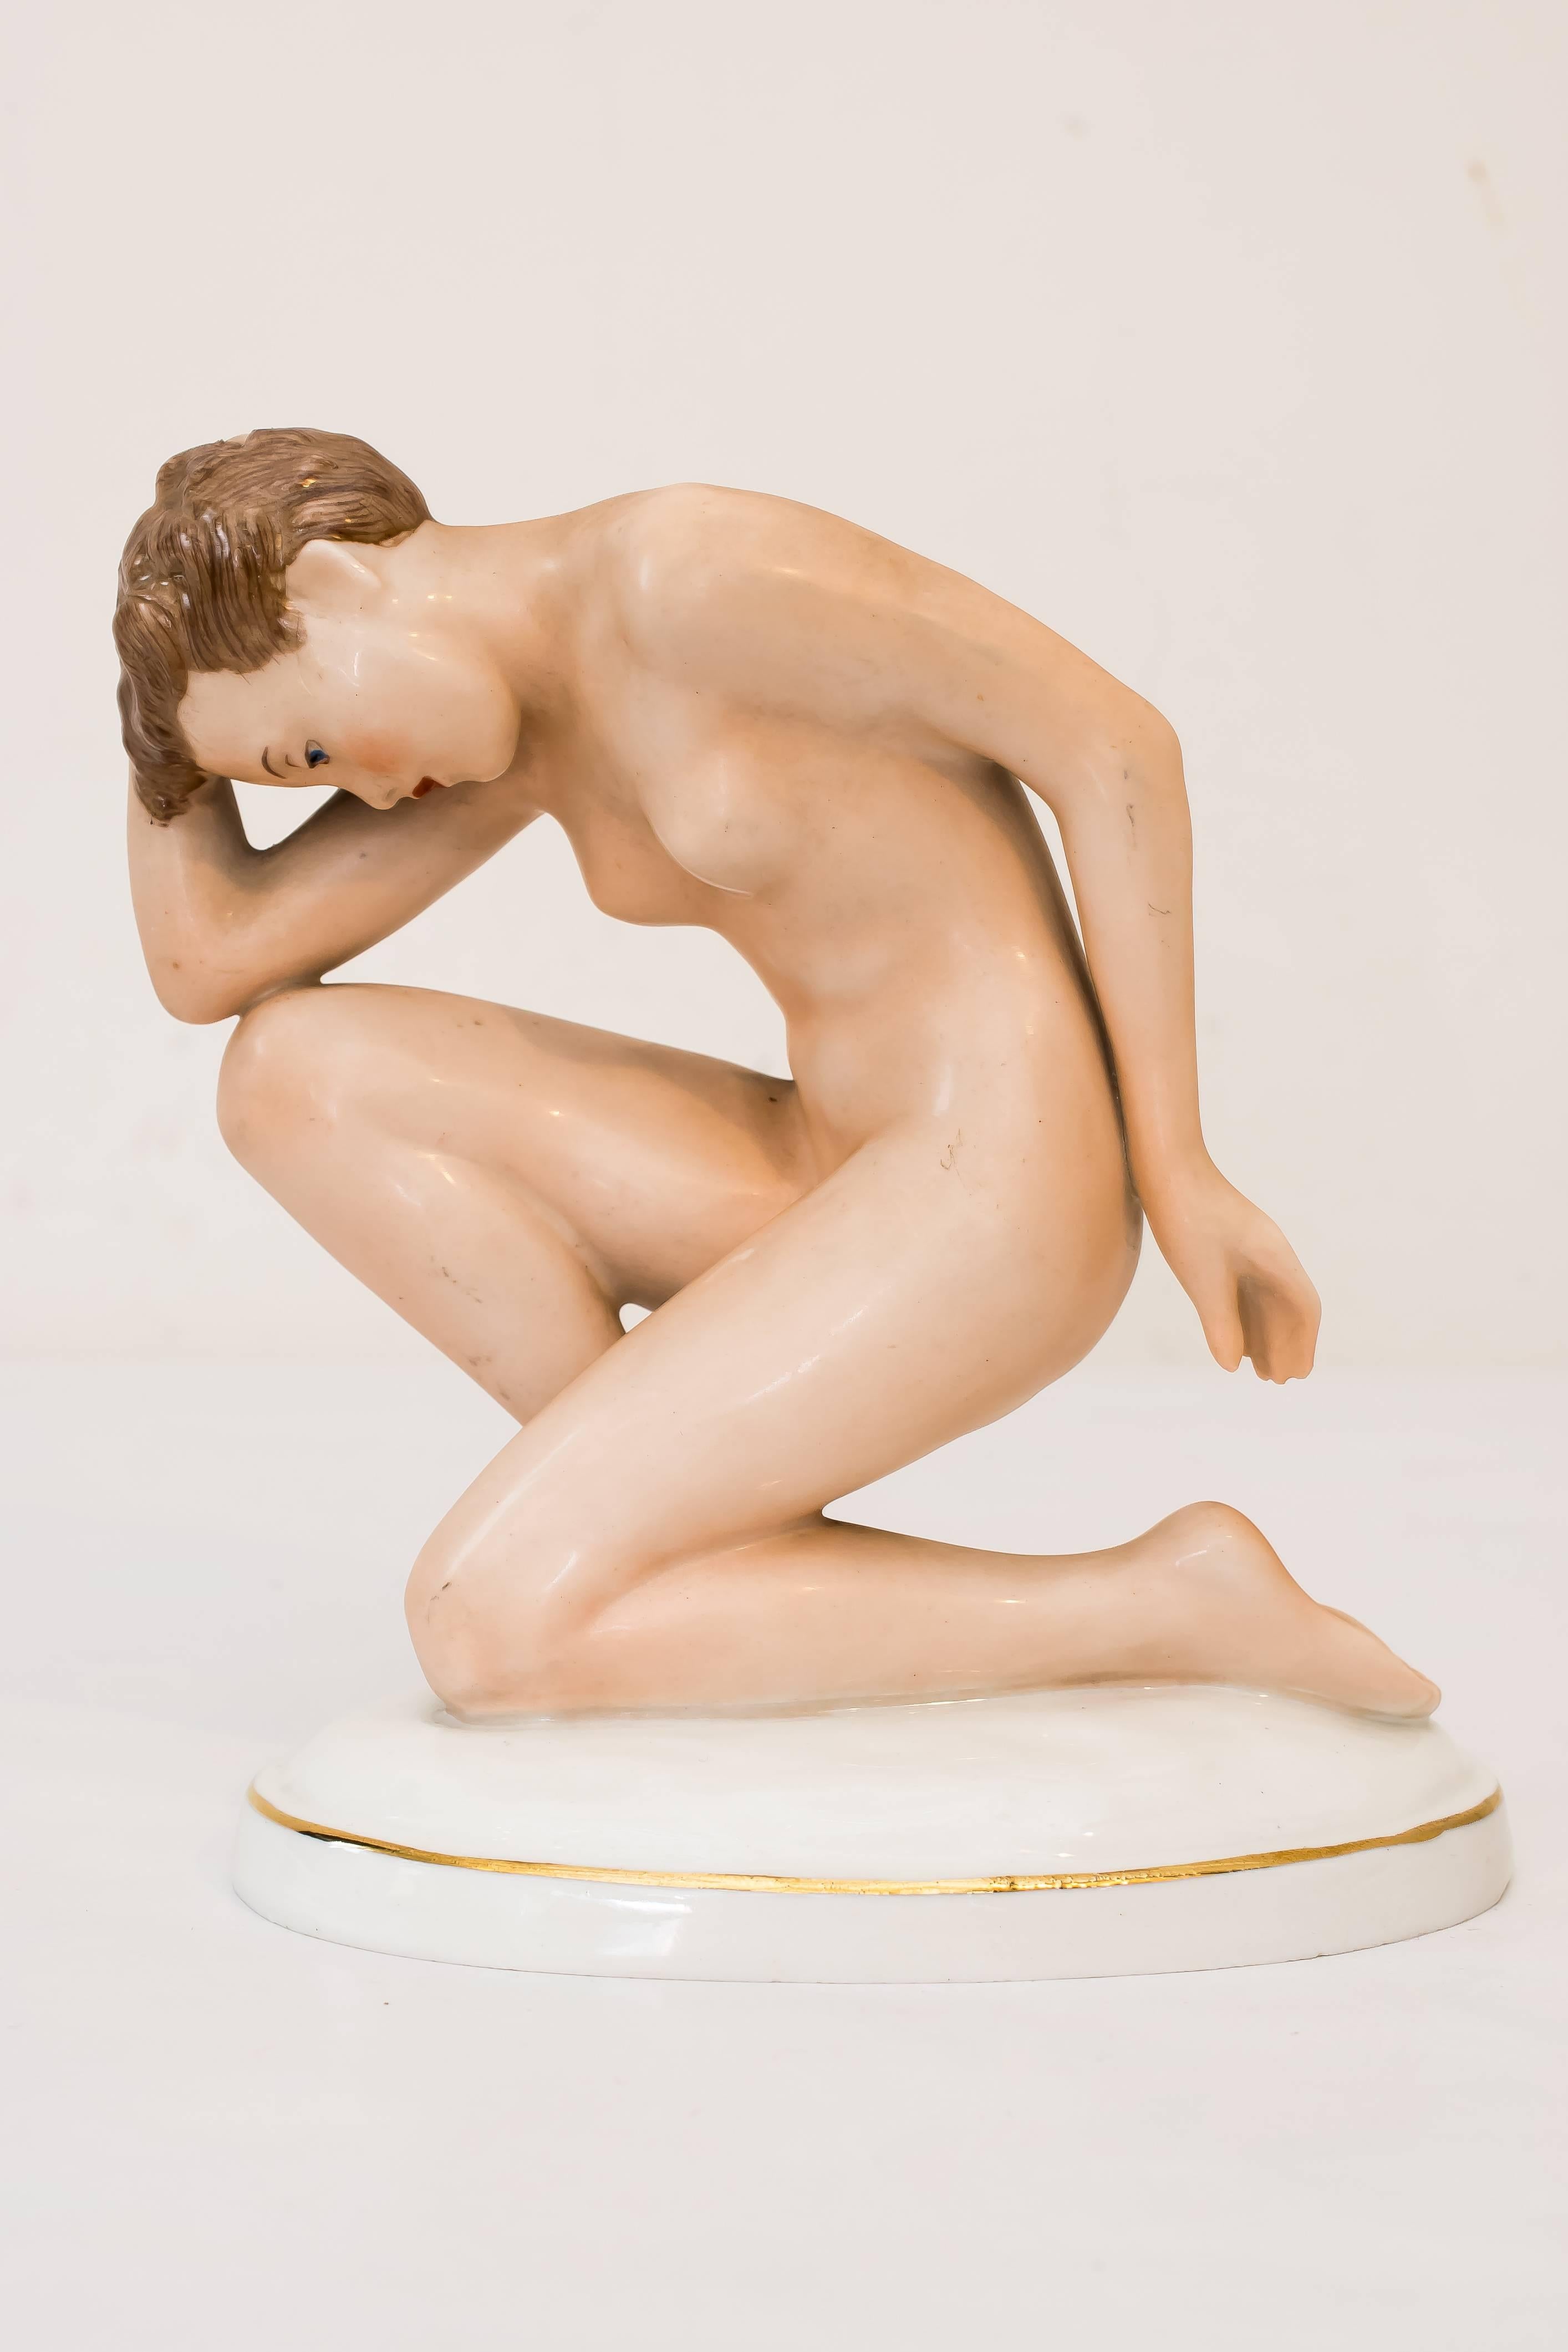 Nude sculpture porcelain
Original condition.